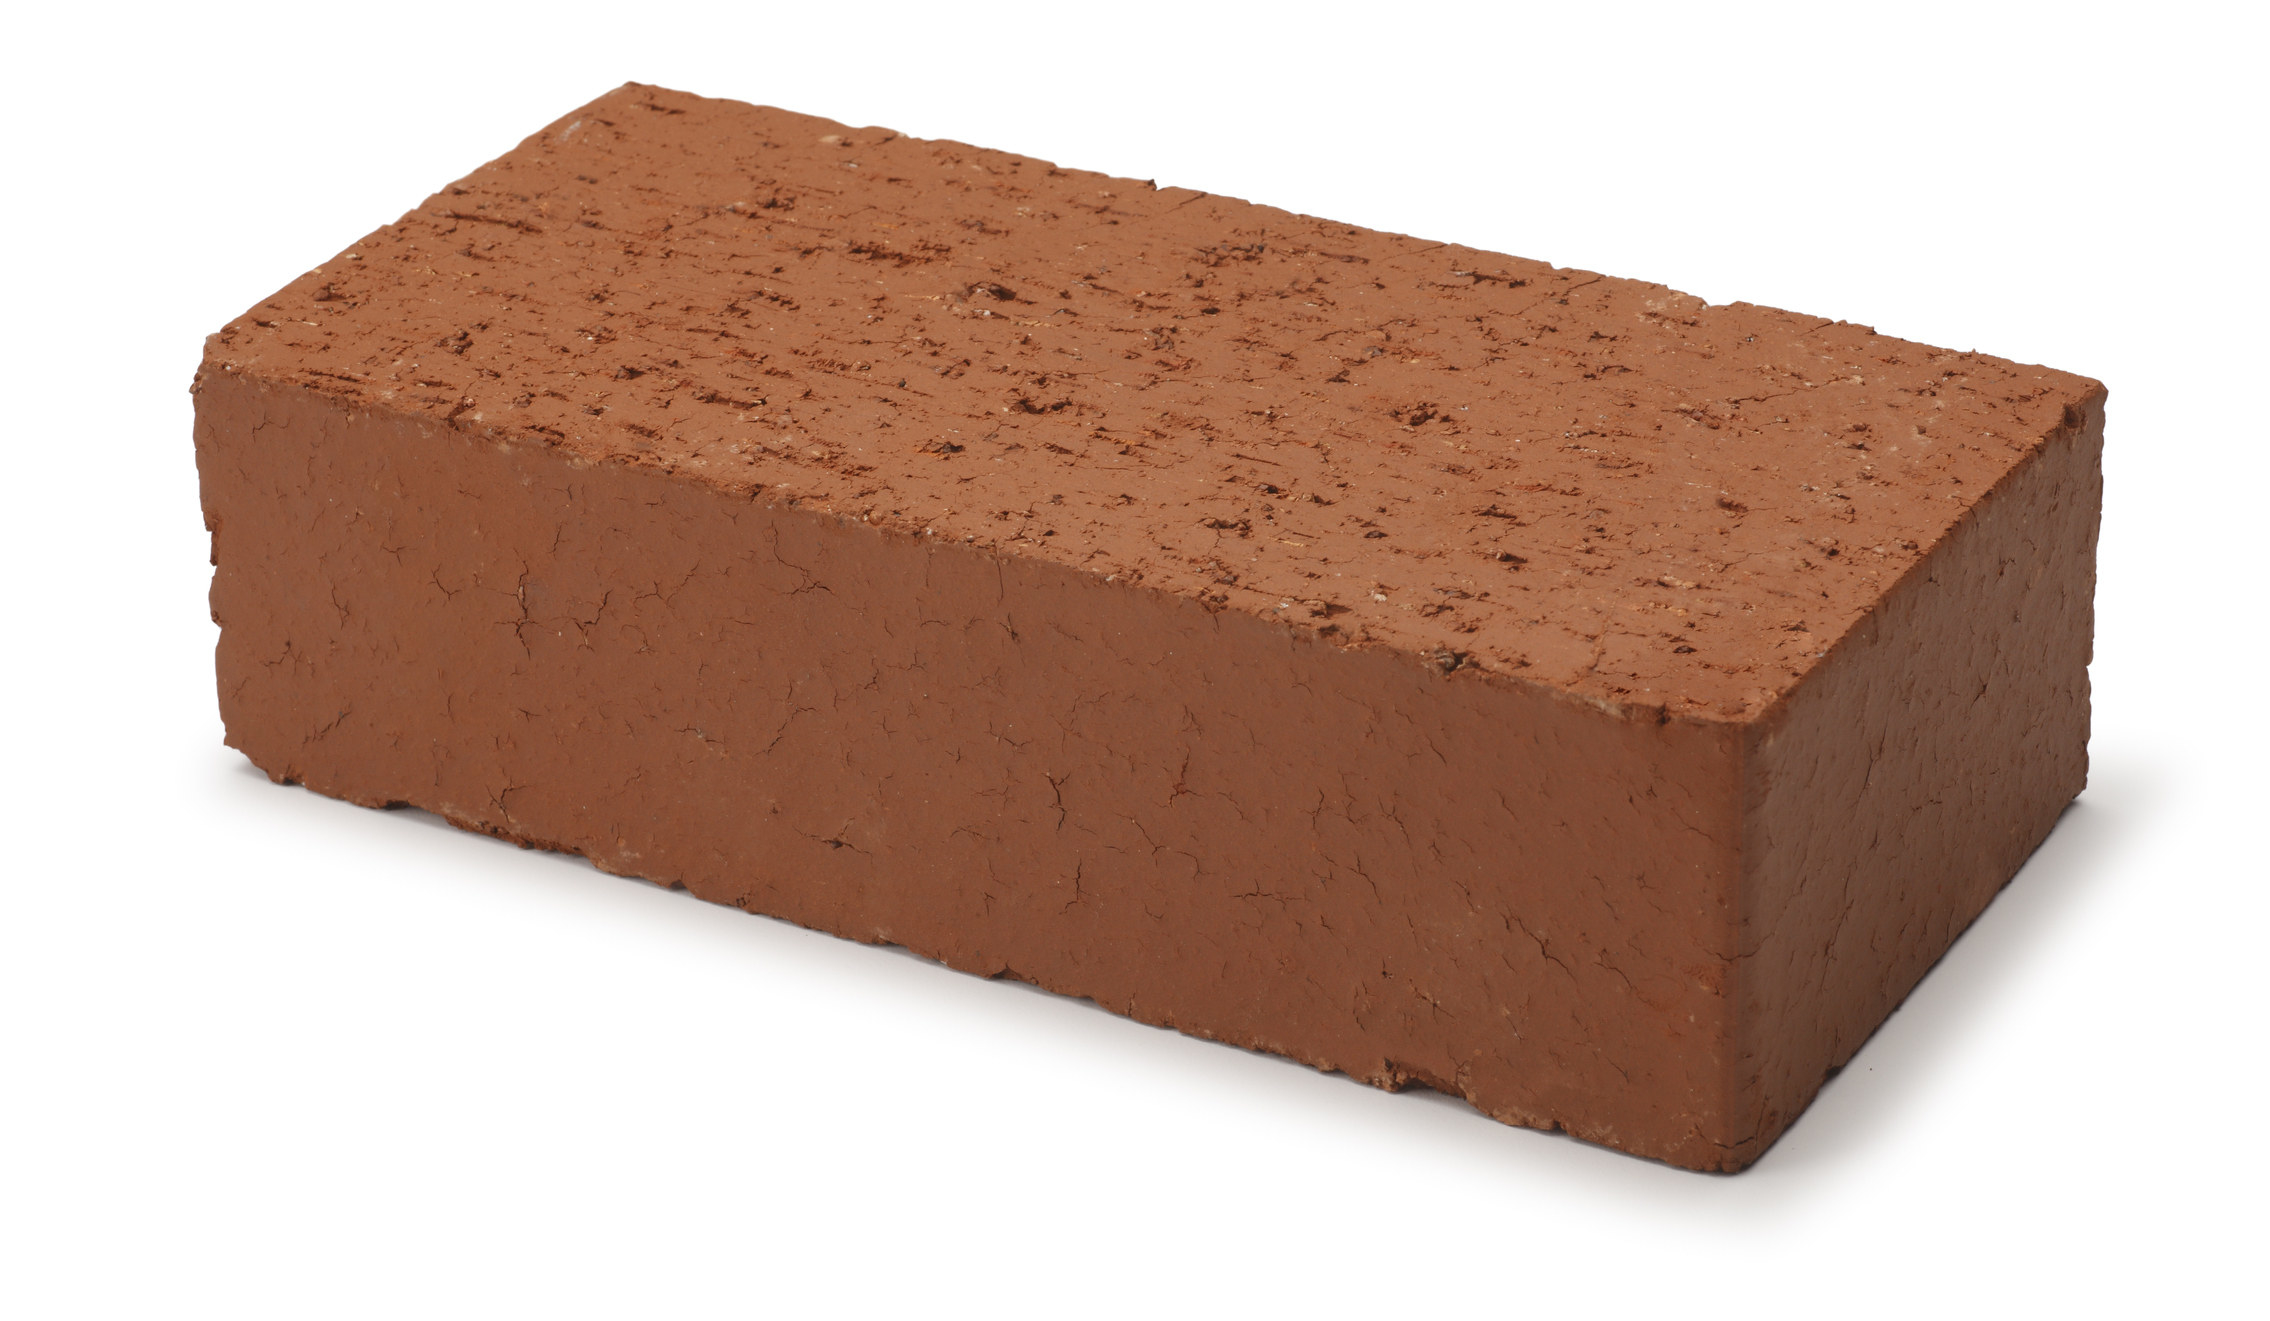 A brick